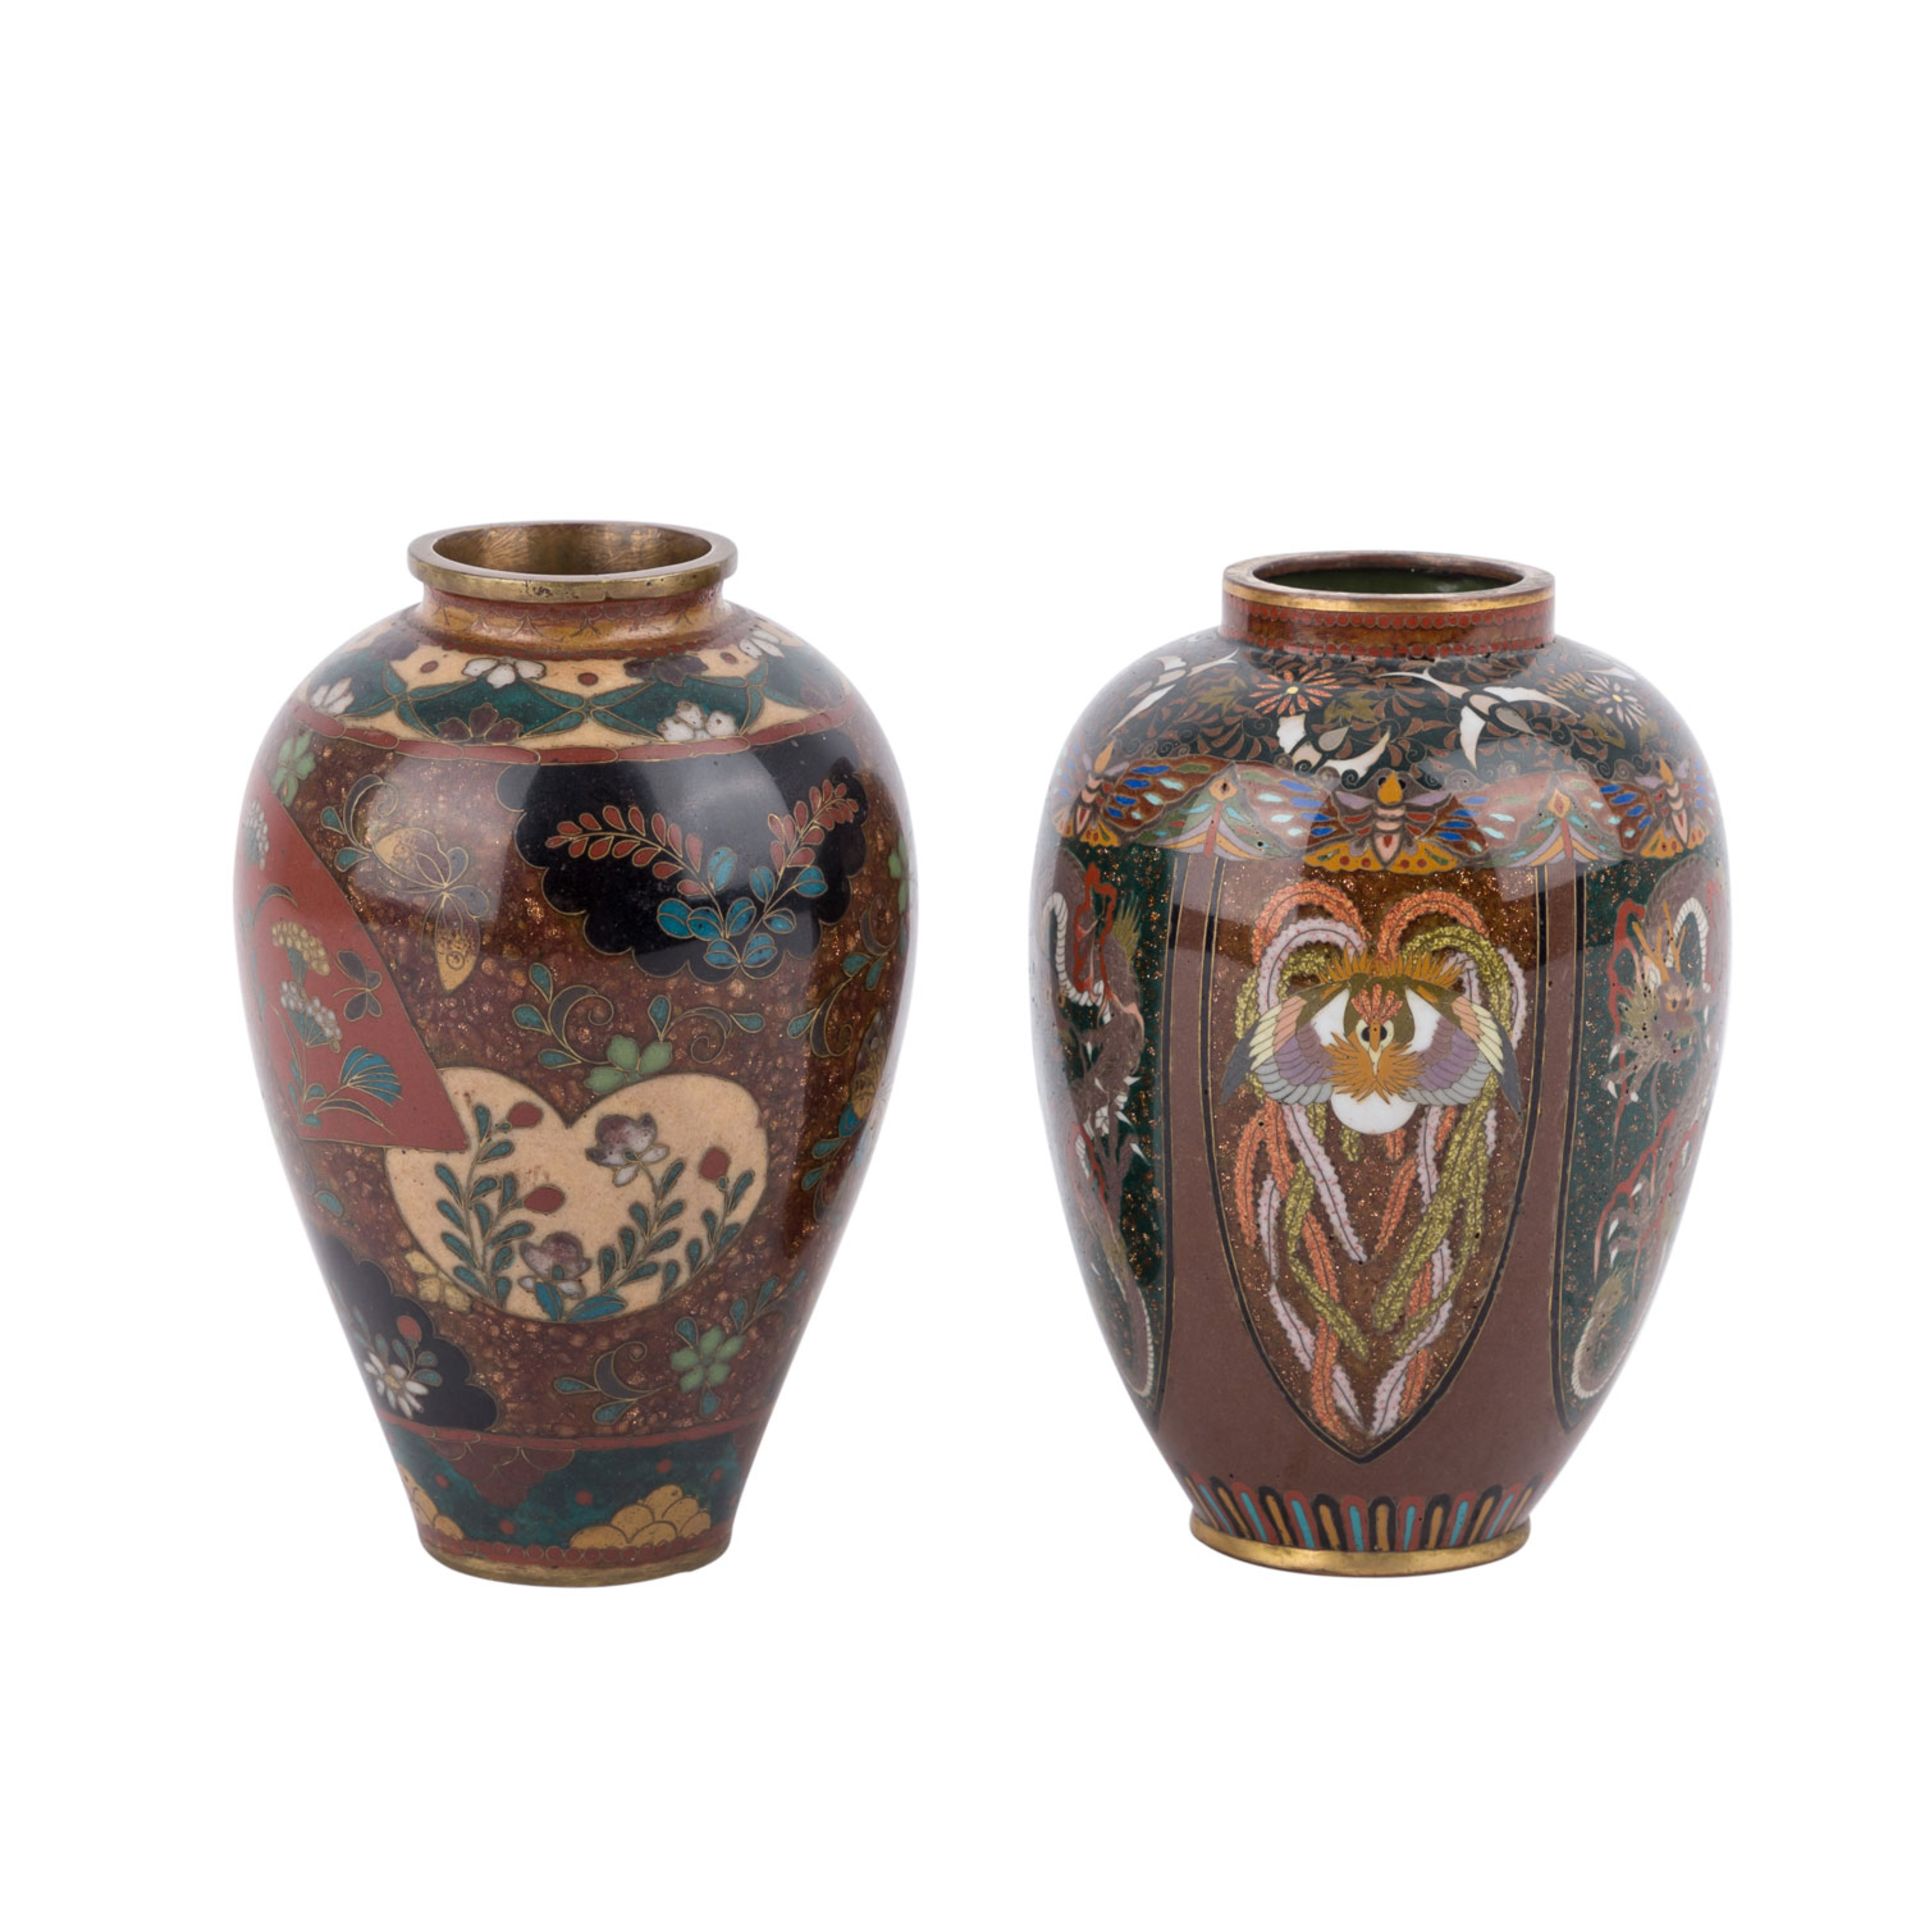 Zwei kleine Cloisonné-Vasen. JAPAN, Meiji-Zeit (1868-1912).Fein verziert in buntem émail cloisonné